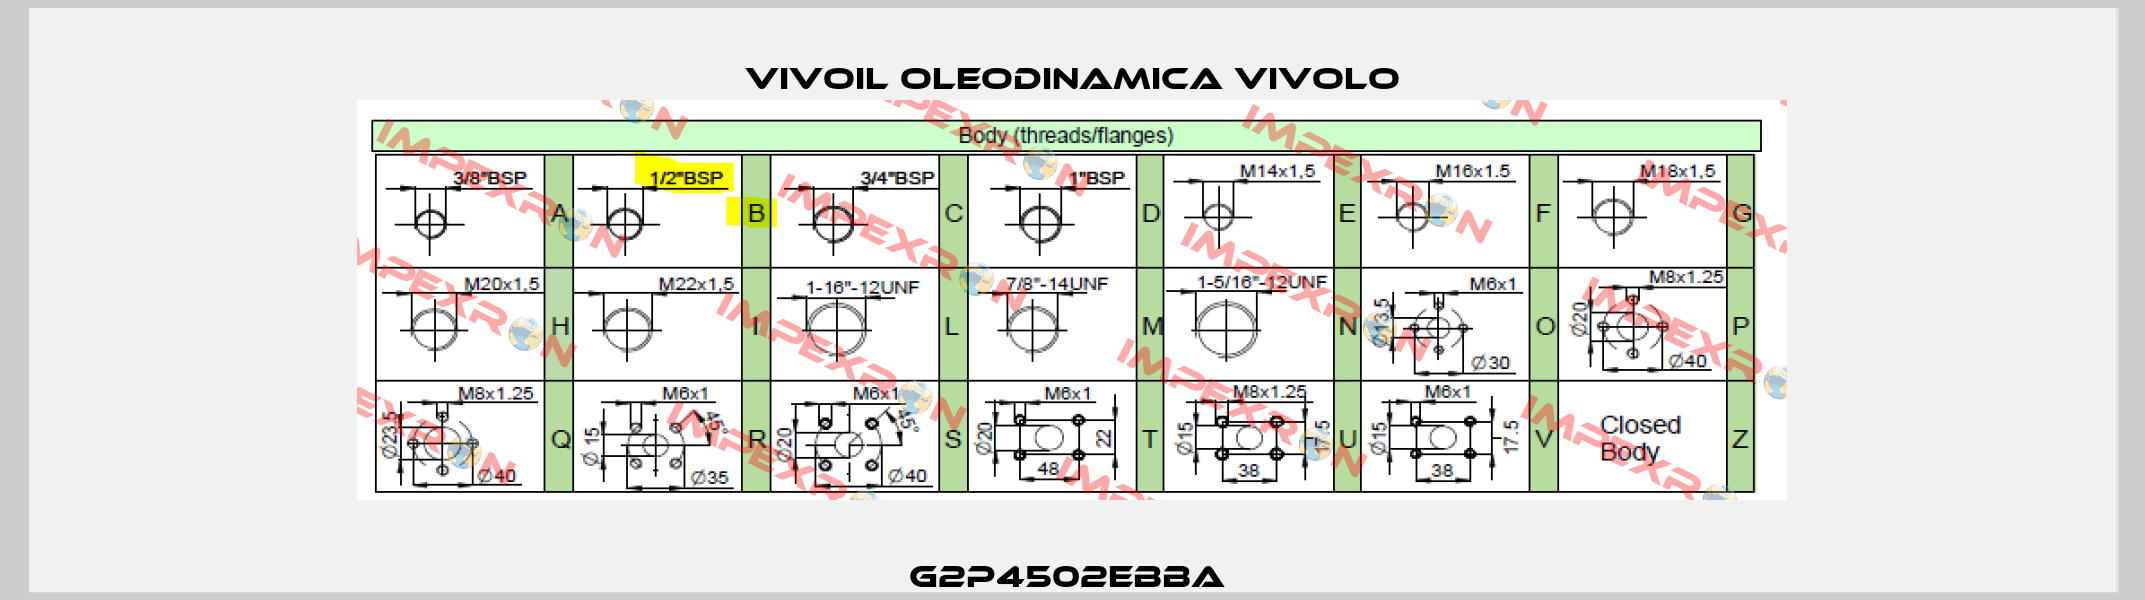 G2P4502EBBA  Vivoil Oleodinamica Vivolo